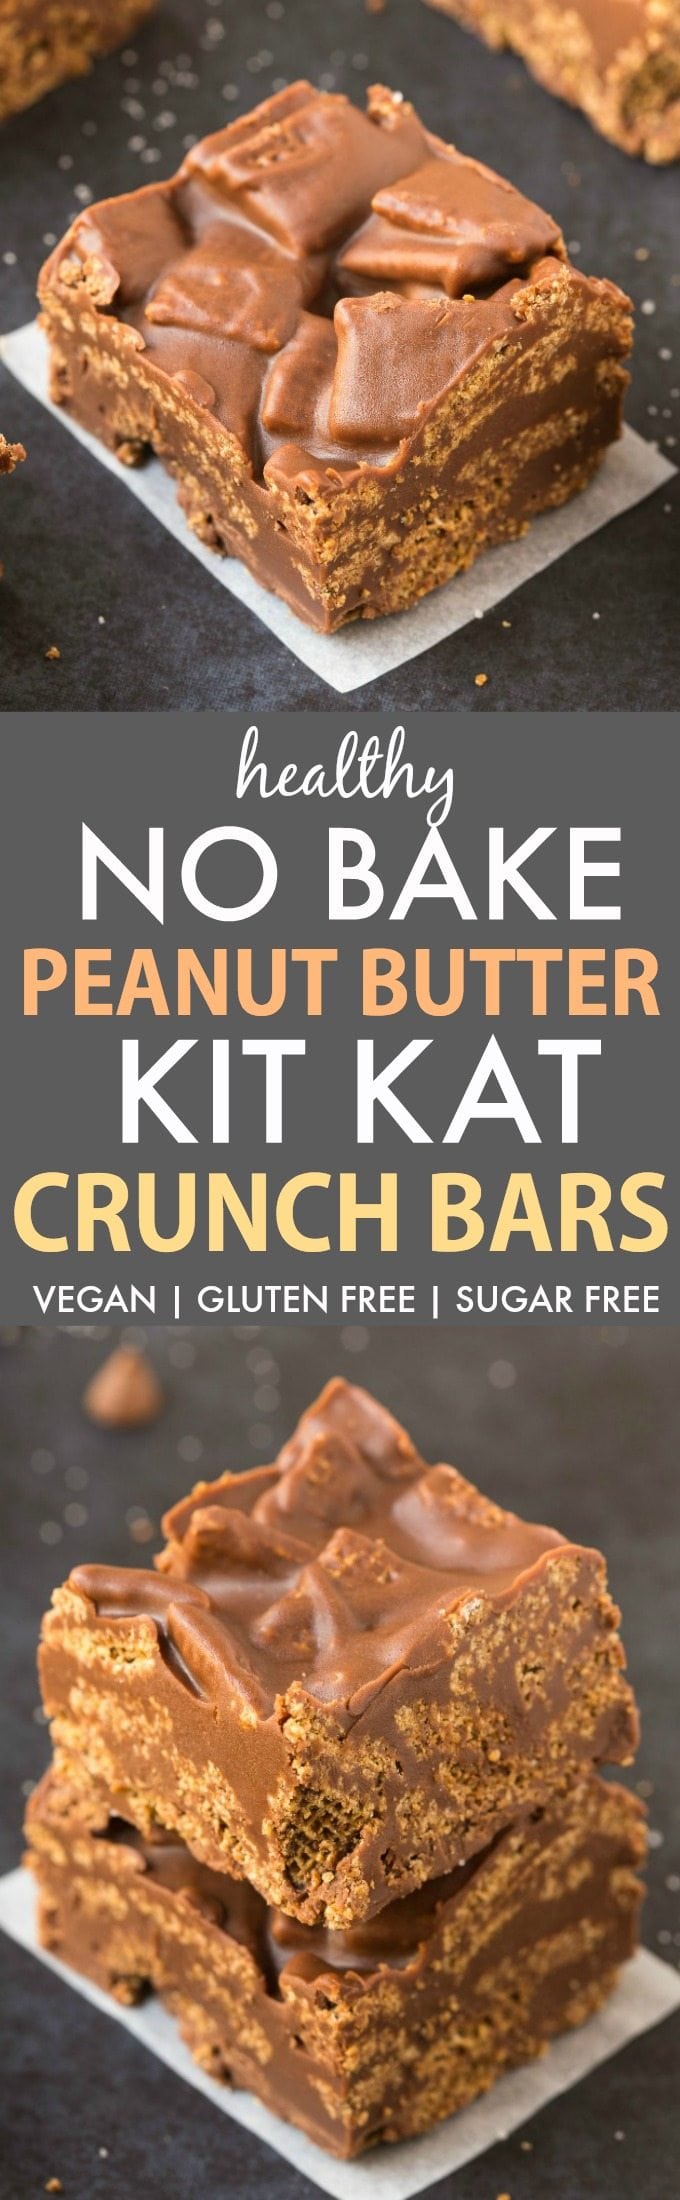 Healthy no bake peanut butter kit kat crunch bars (vegan, gluten free)